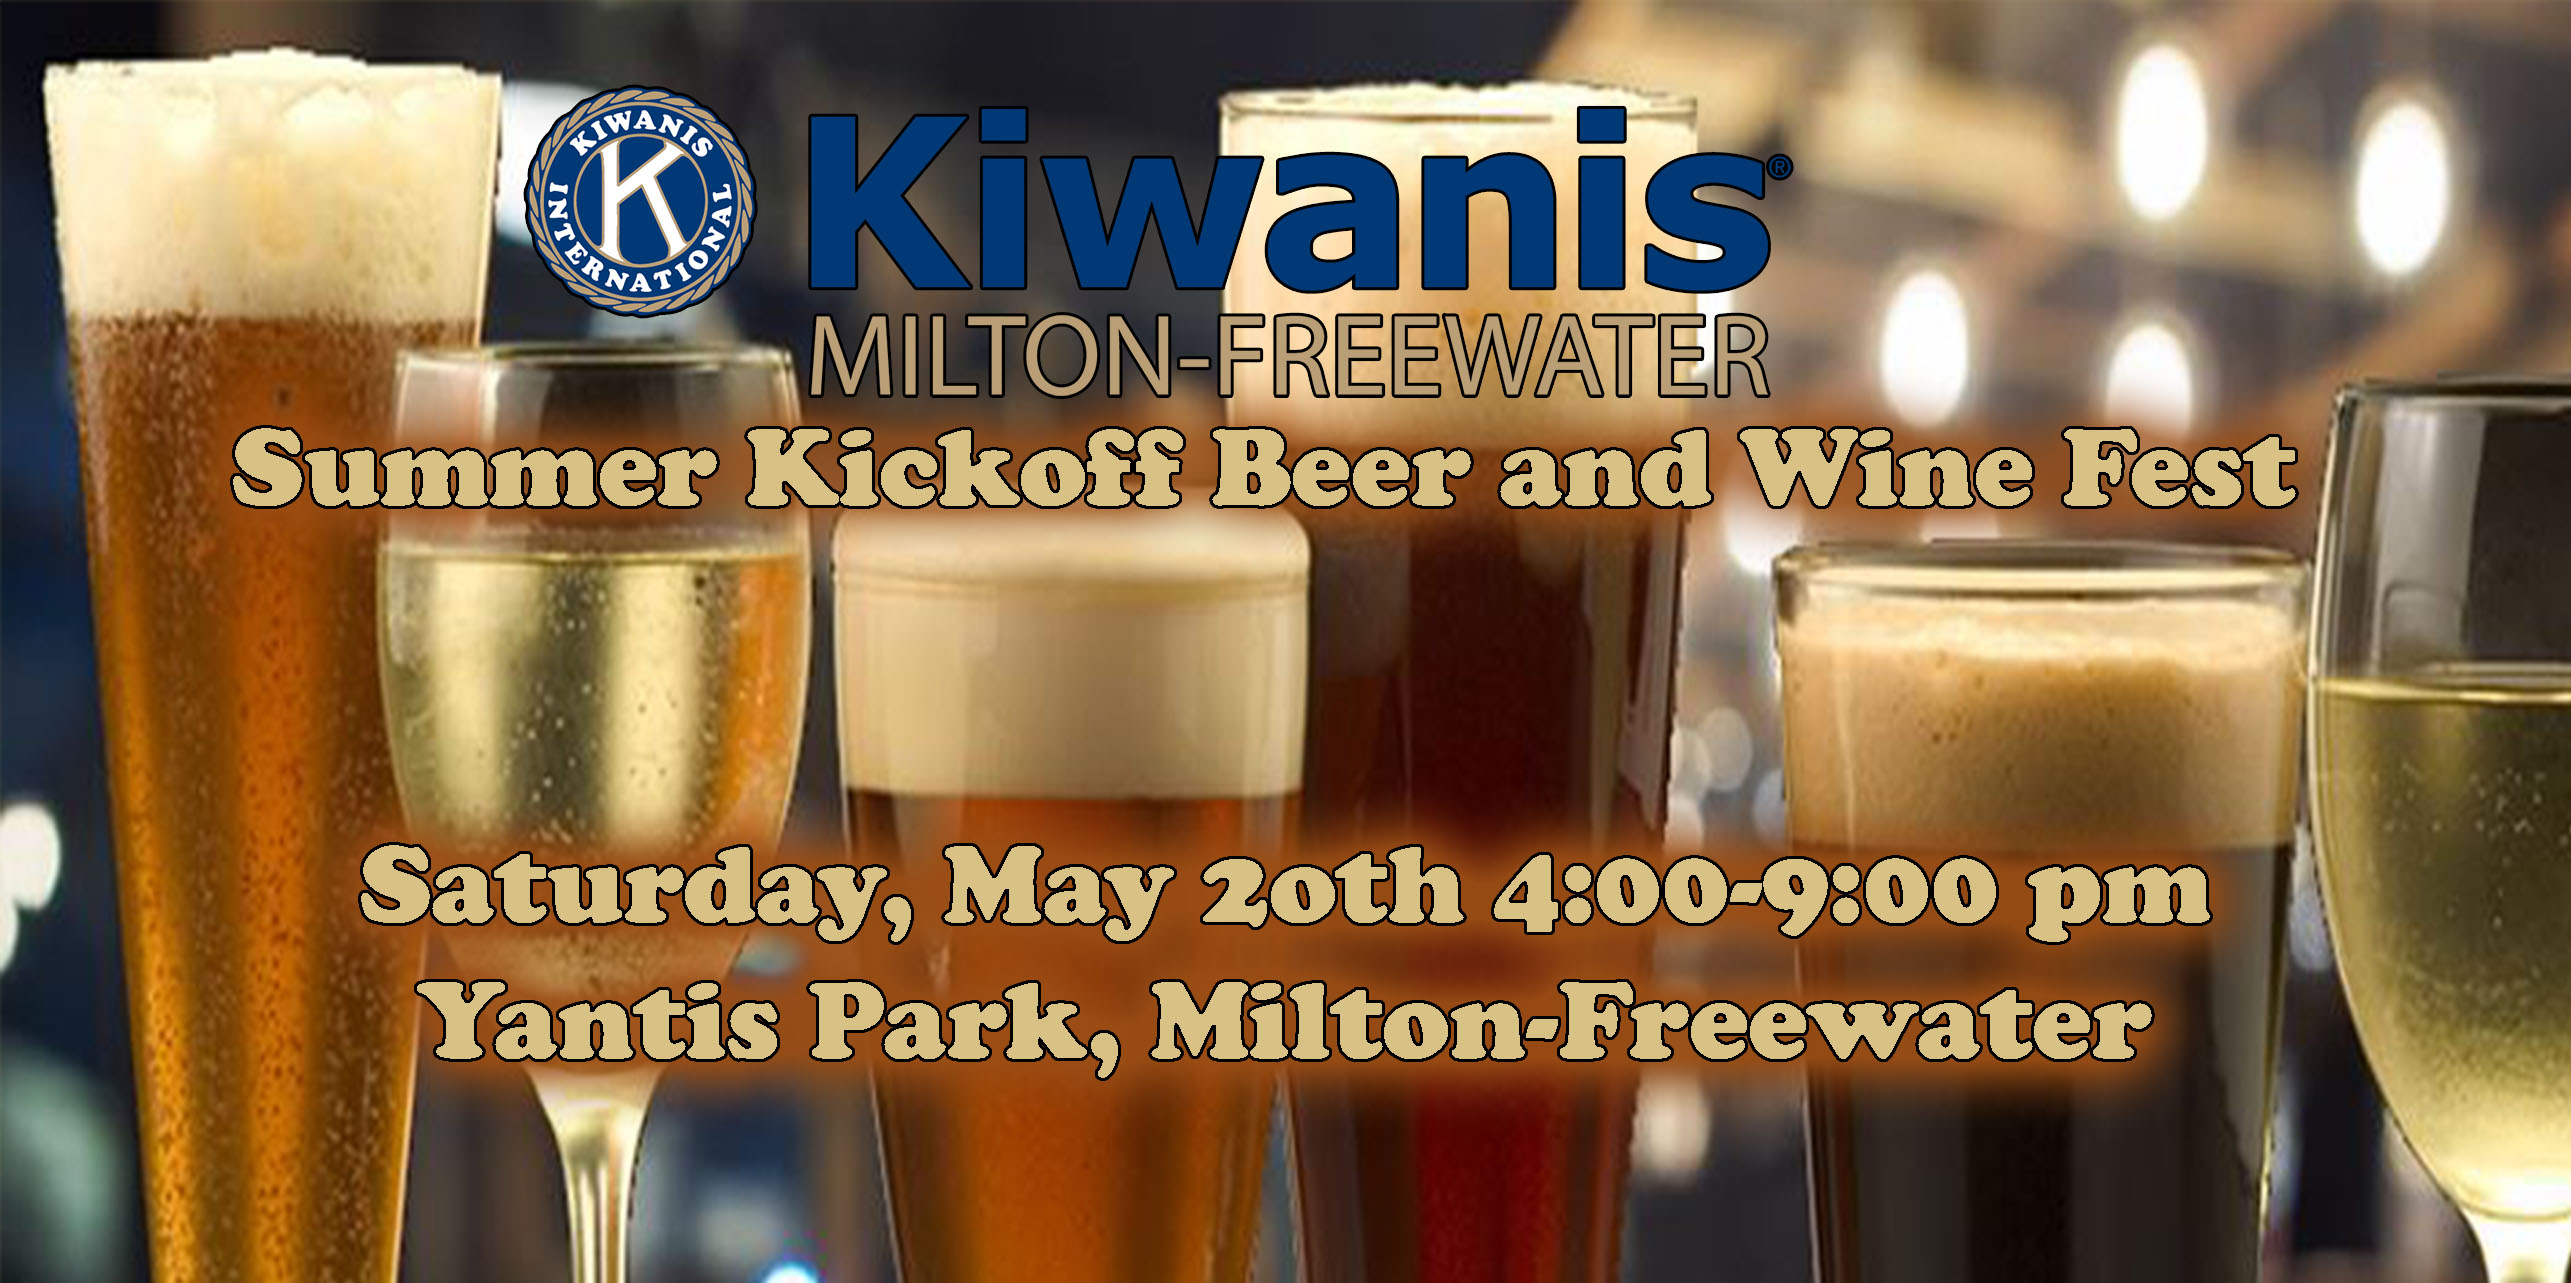 Kiwanis Summer Kickoff Beer and Wine Fest banner image